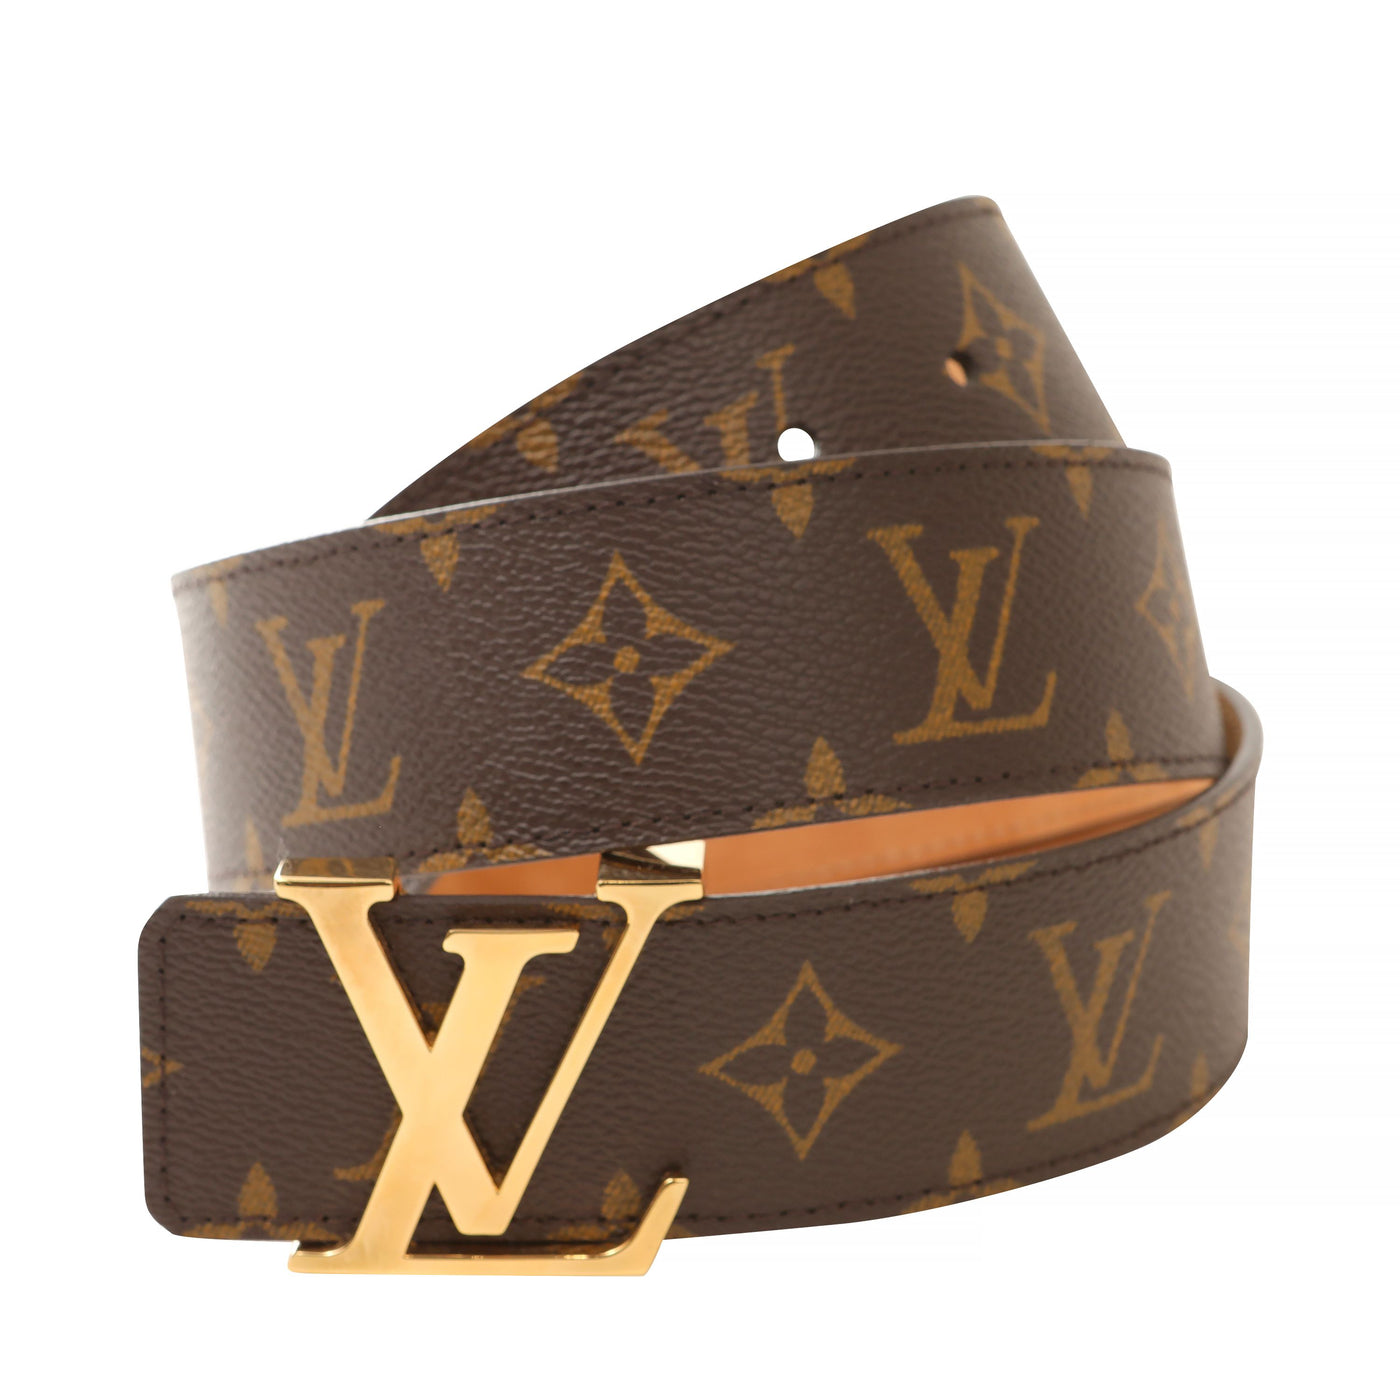 Louis Vuitton Monogram Leather Belt w/ Gold Hardware